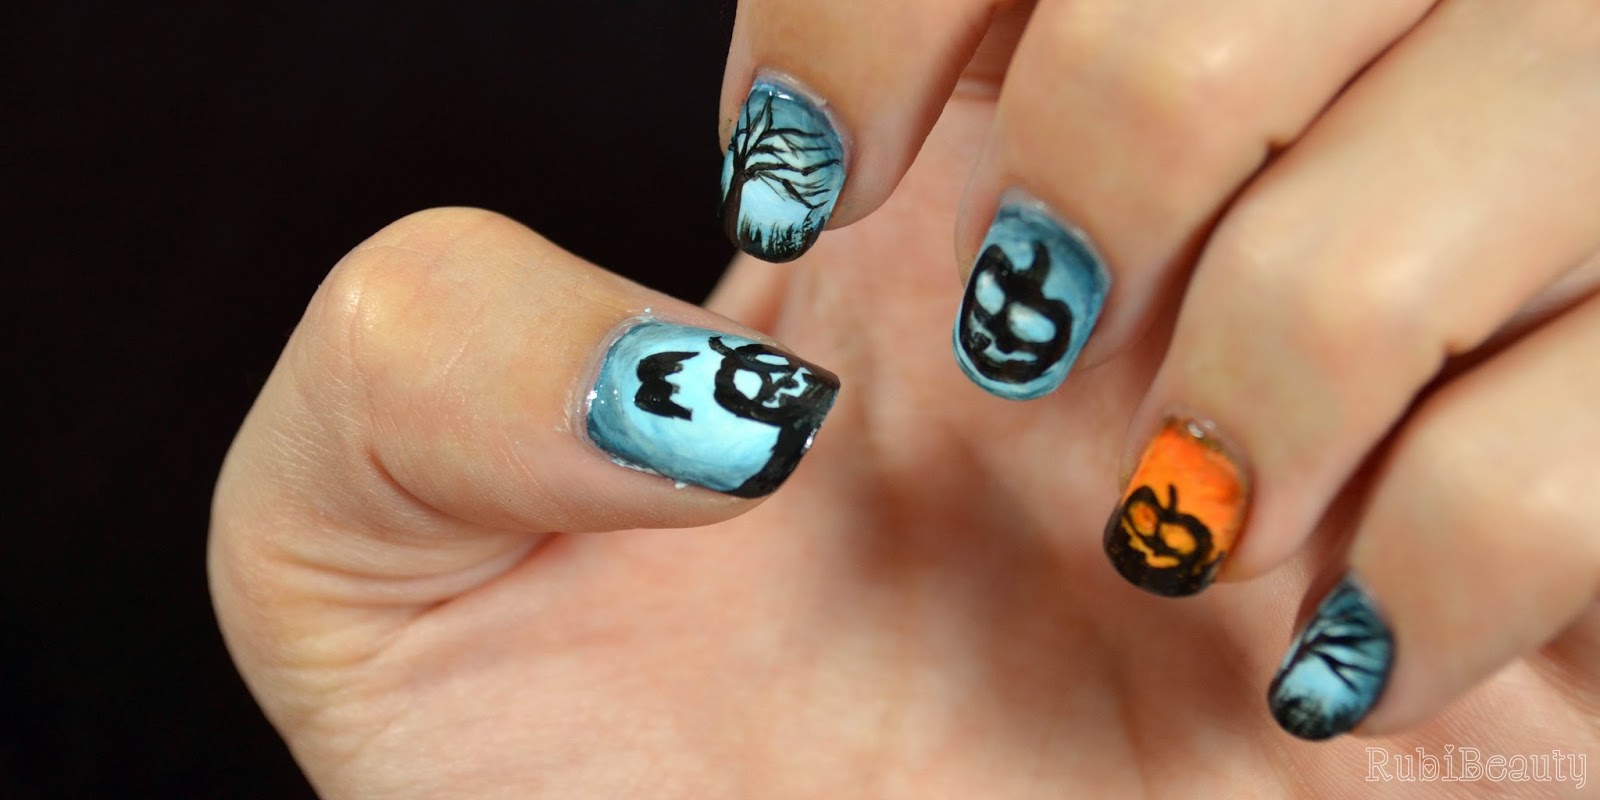 Rubibeauty nail art nailart halloween 2014 pumpkins